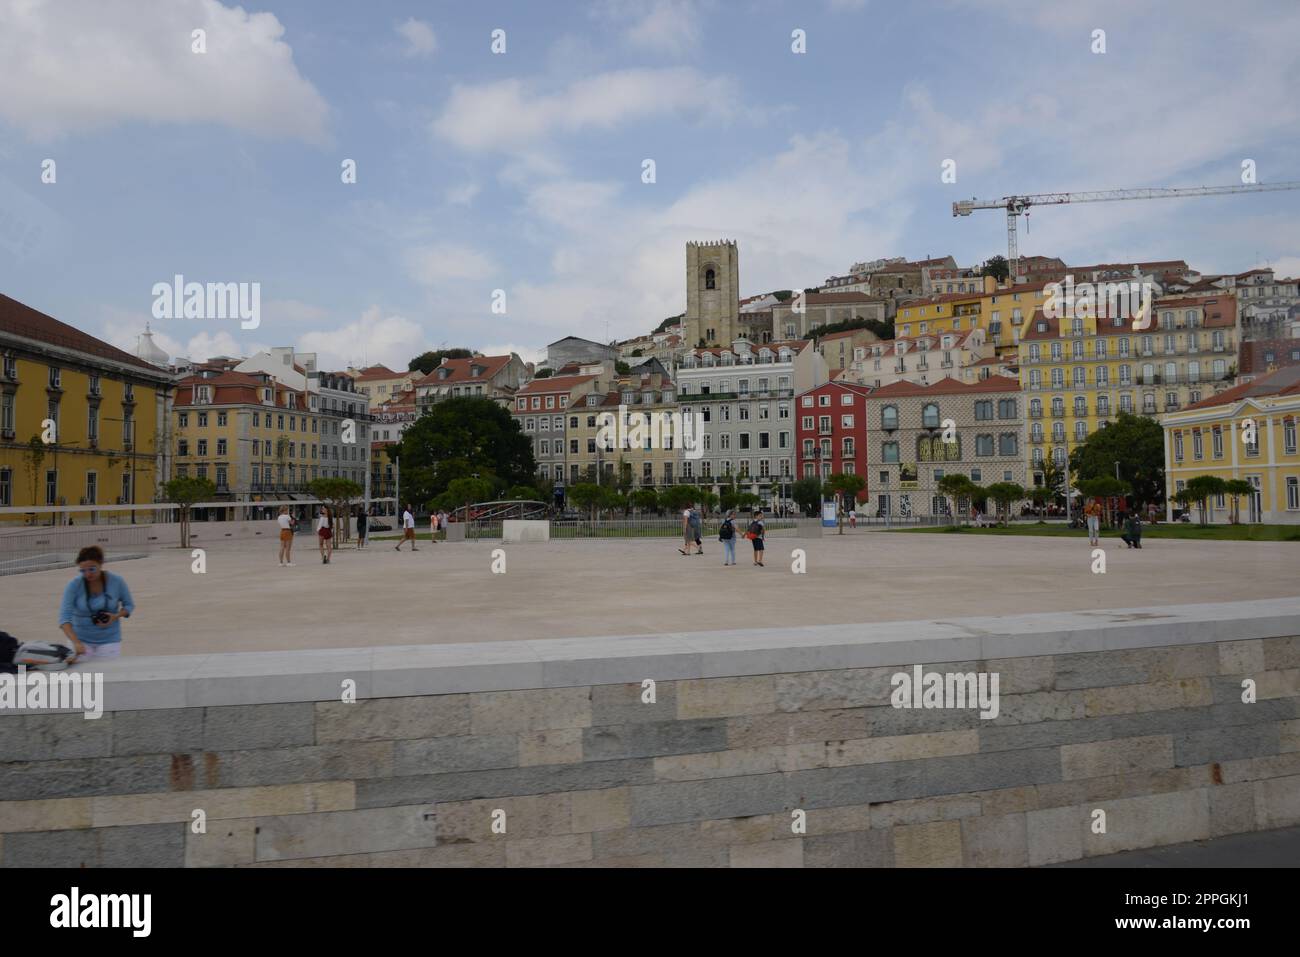 Fassaden von Häusern, Stadtlandschaften in Lissabon - Lisboa - , der Hauptstadt Portugals, September 2018 Stockfoto